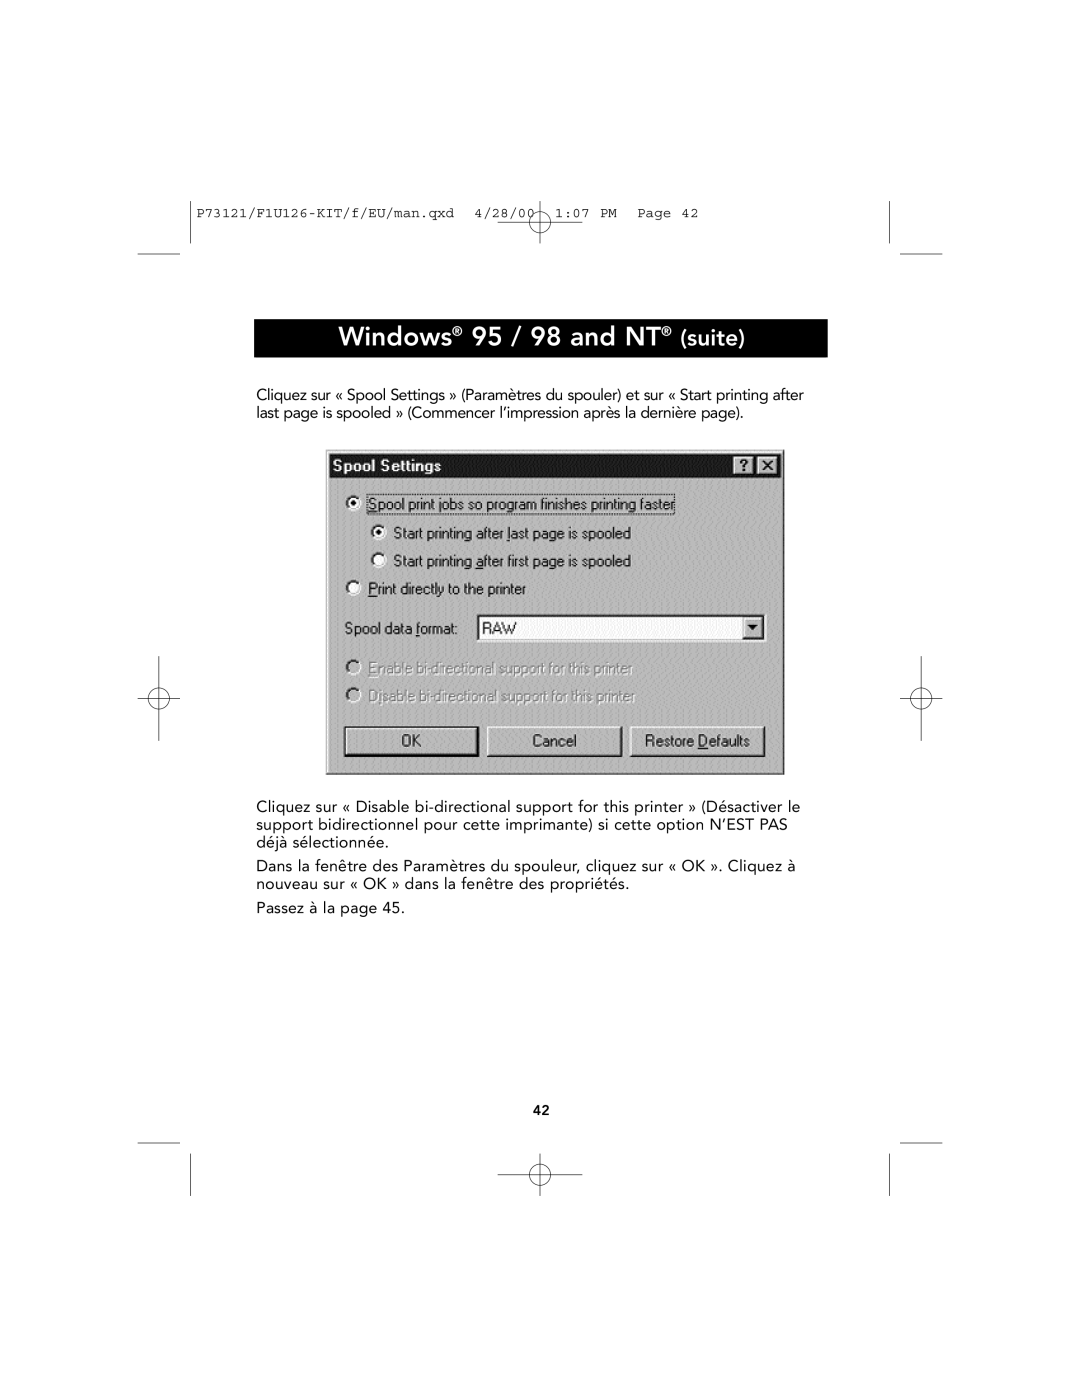 Belkin P73121, F1U126-KIT user manual Windows 95 / 98 and NT suite, Passez à la page 